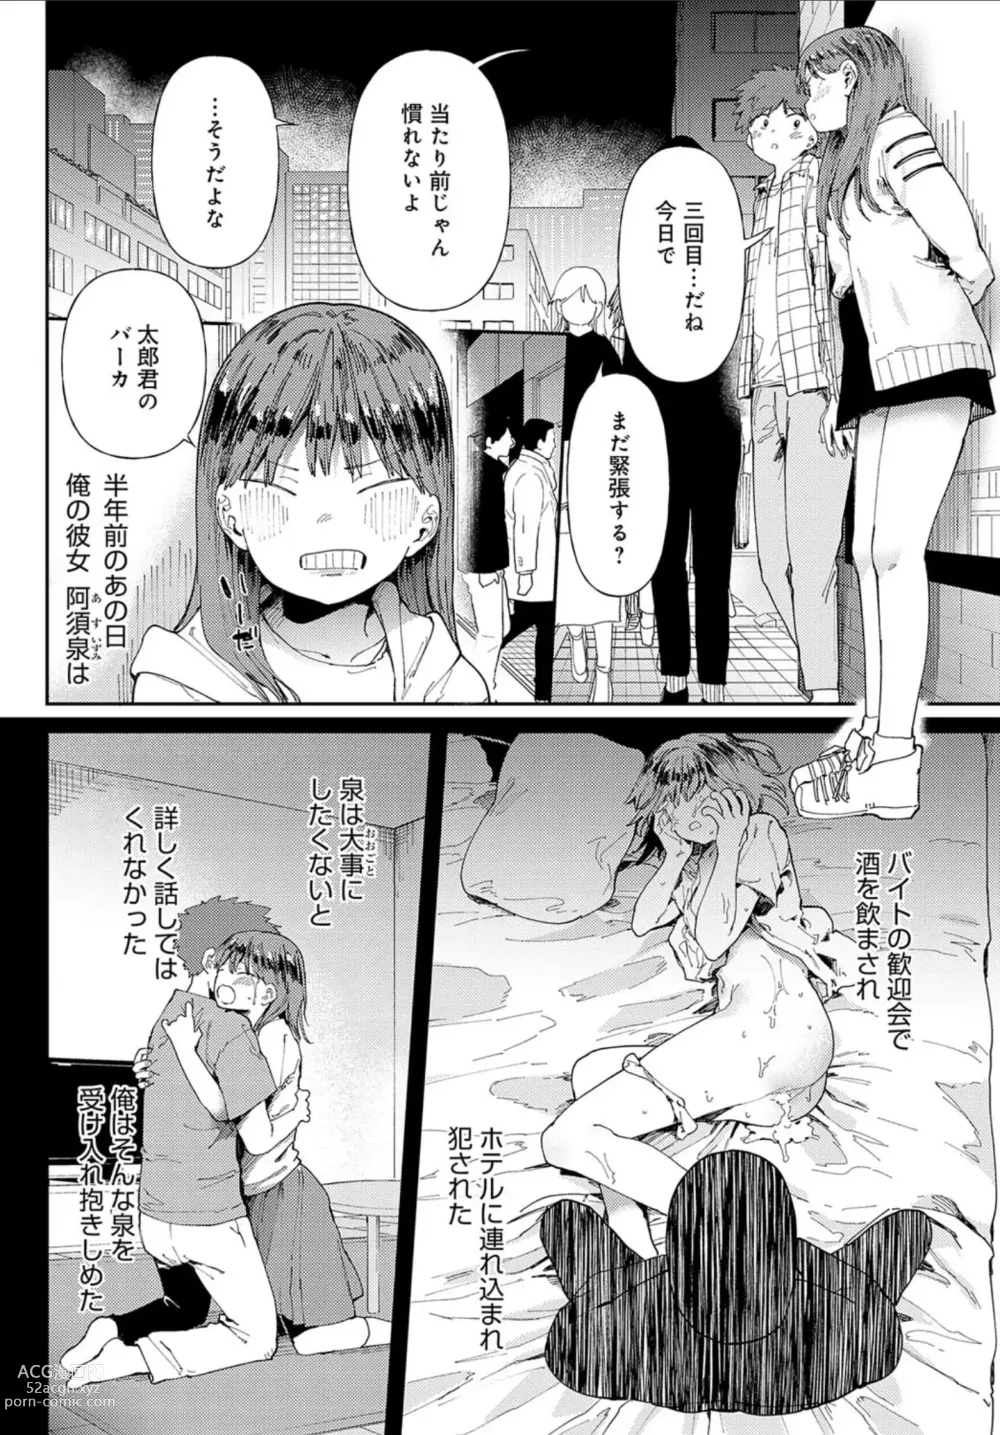 Page 6 of manga Ai ni Shadow wo Nuri Kasane